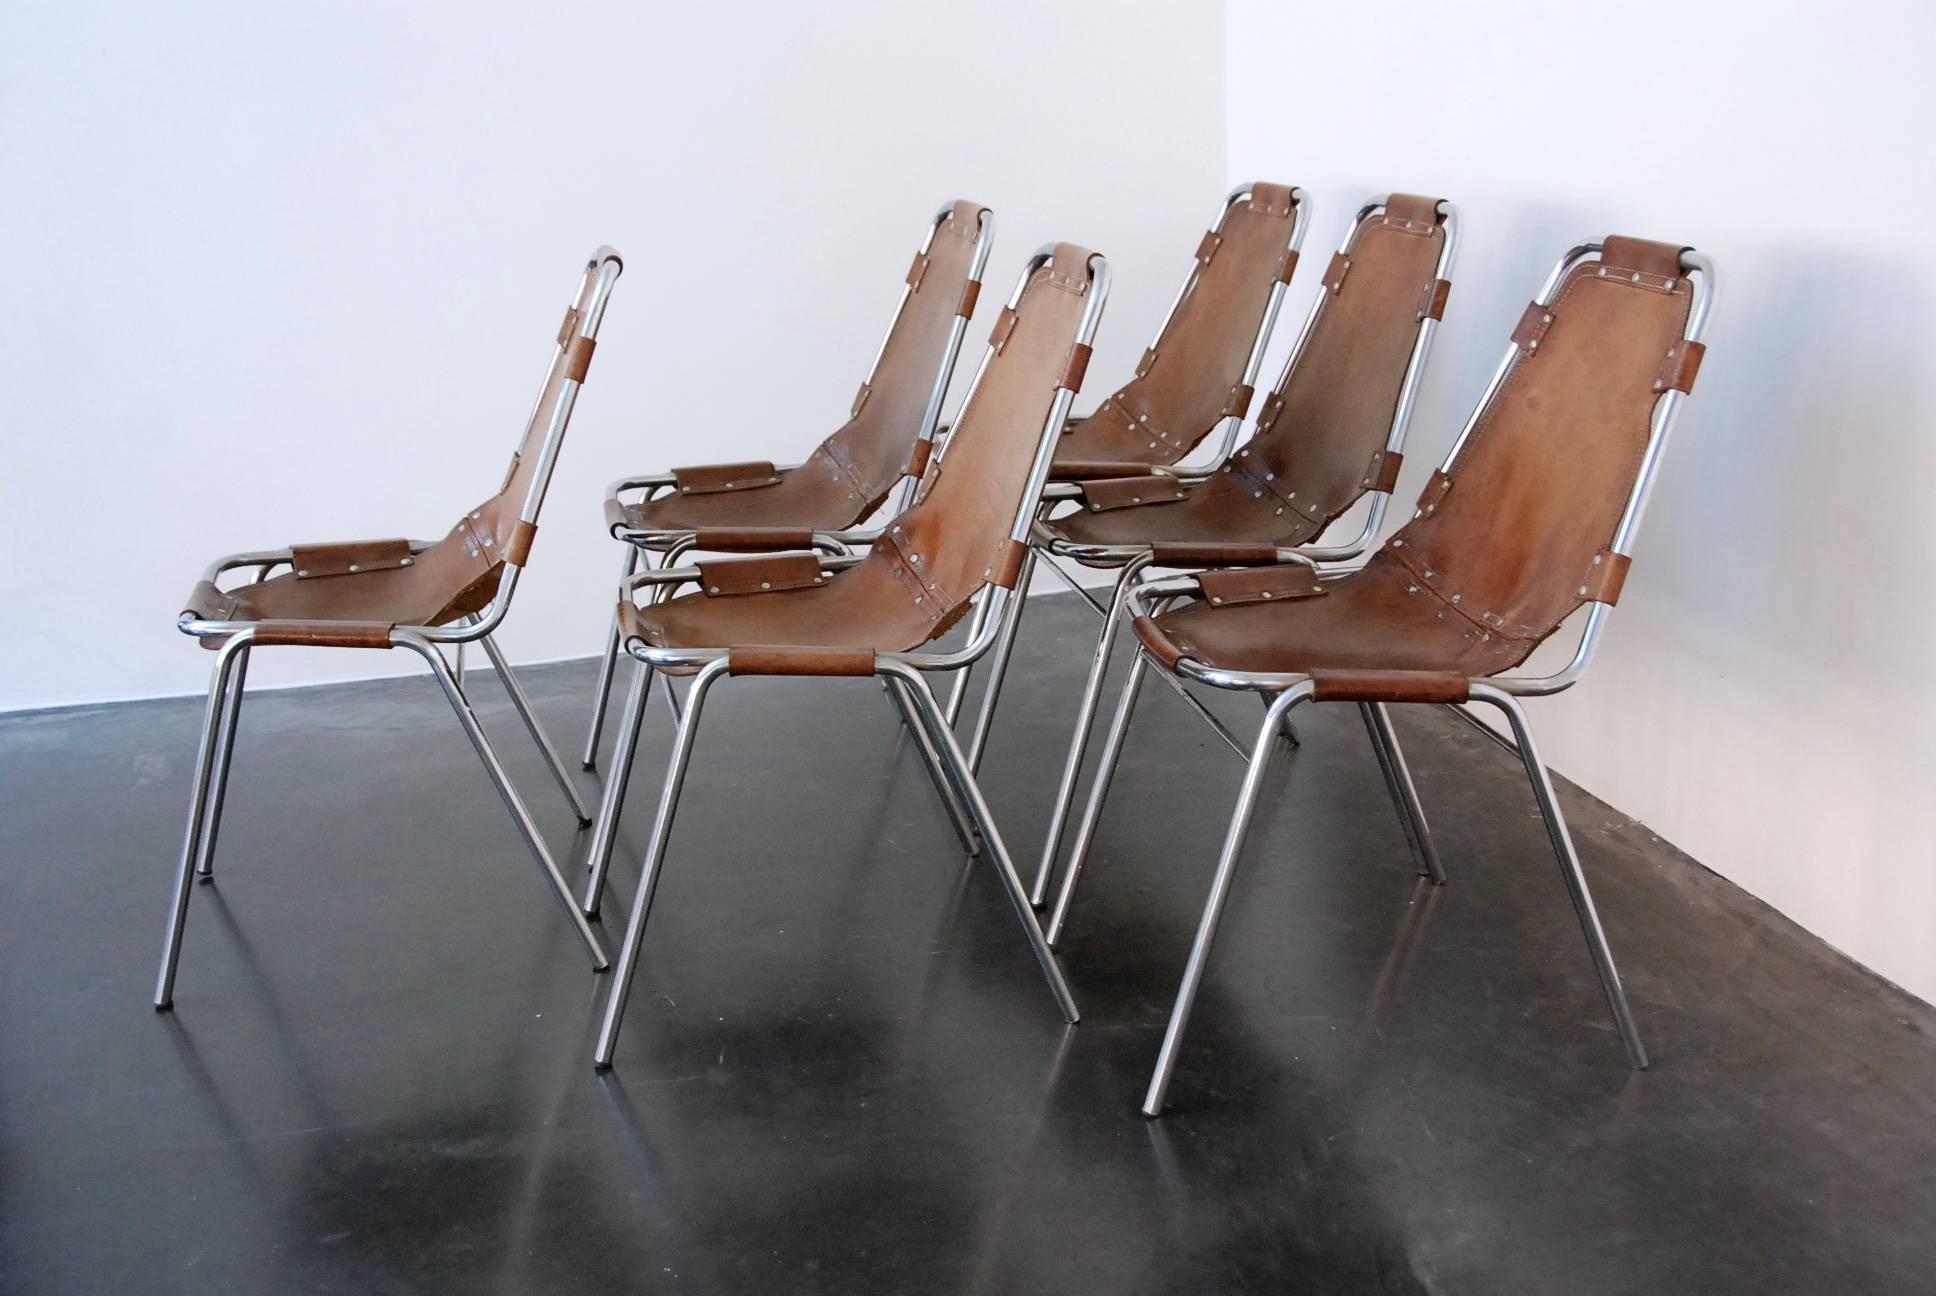 French Set of Six Chairs, Les Arcs resort model